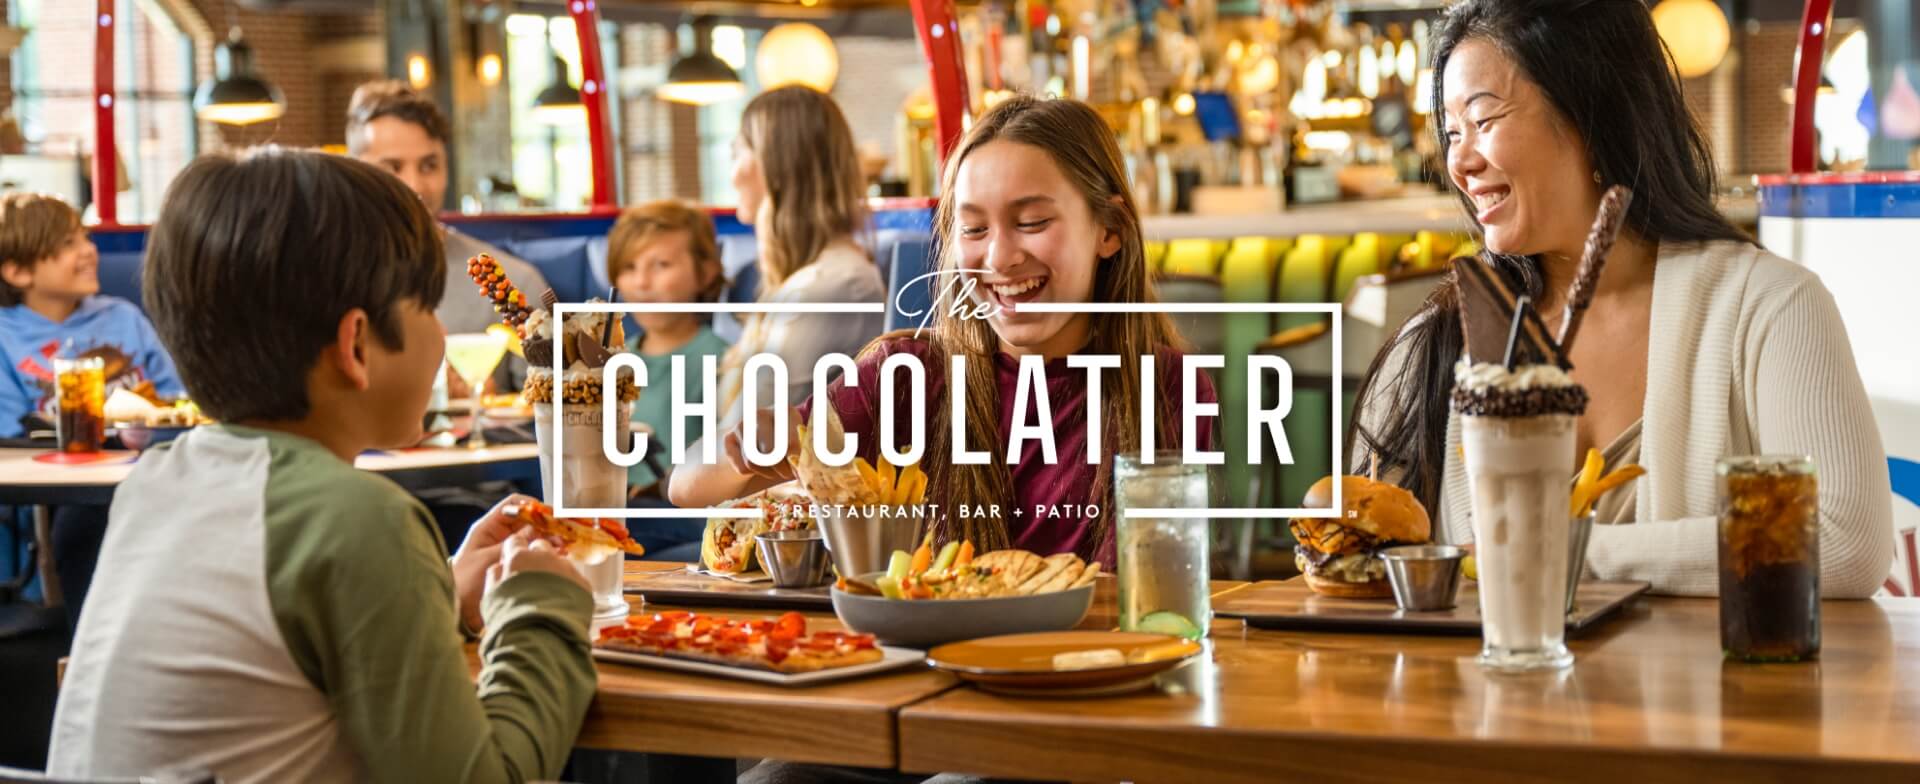 Chocolatier Logo and food